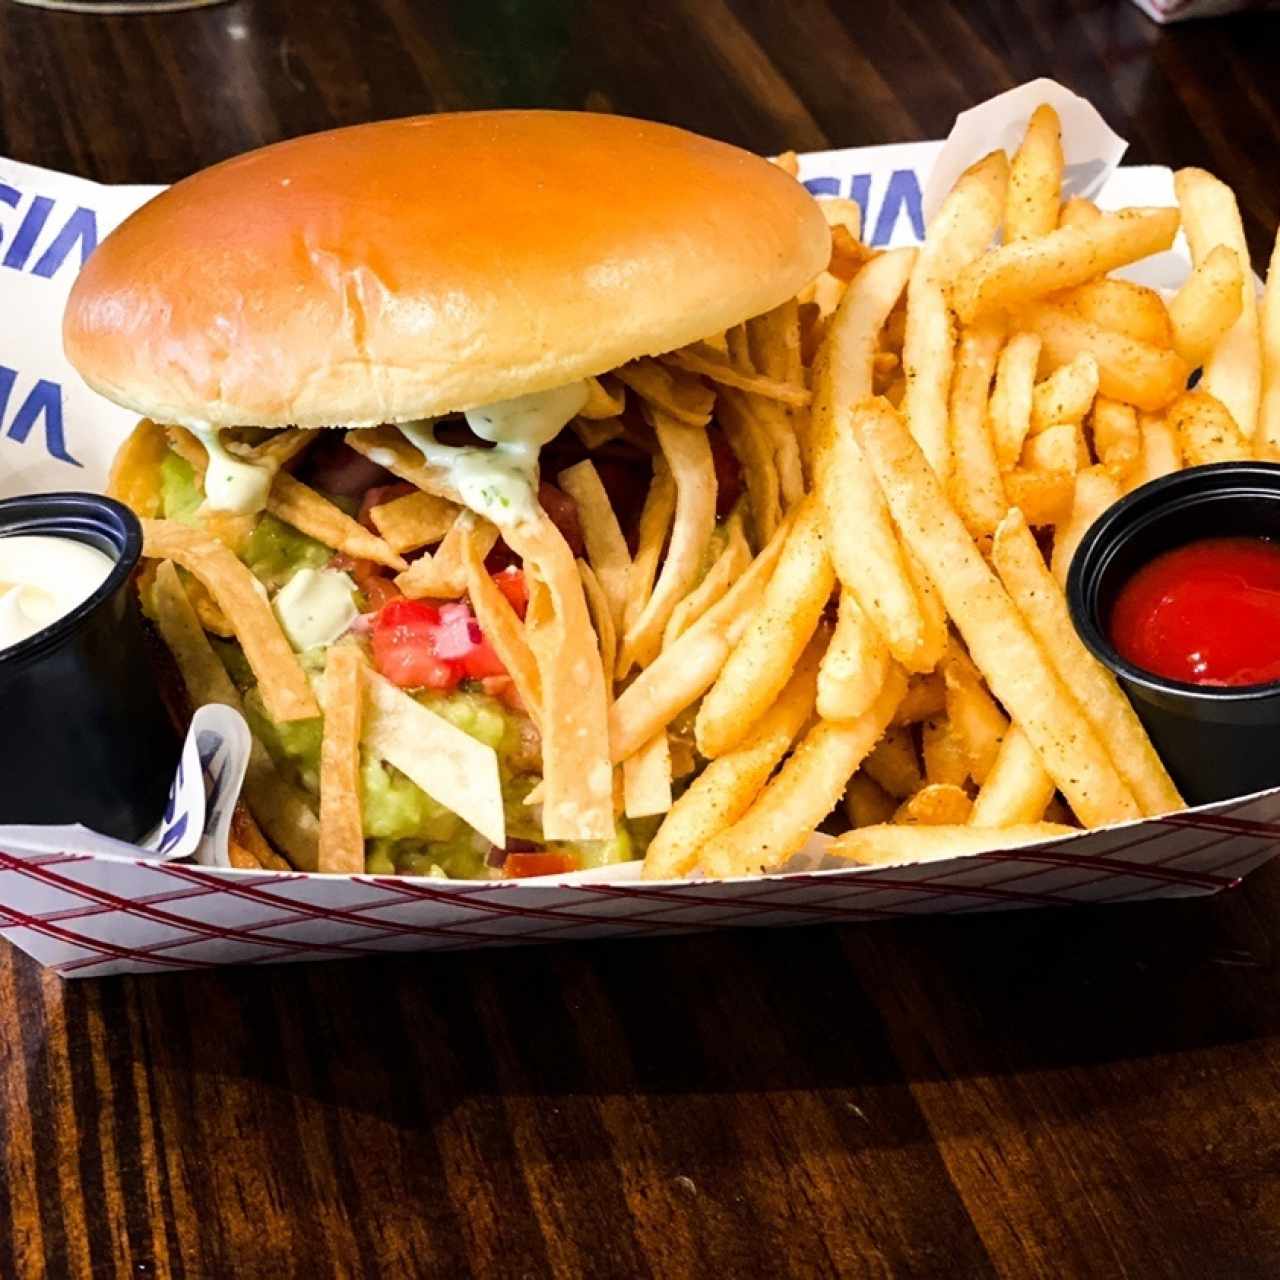 Burger Week Burger 2022 - The Texican